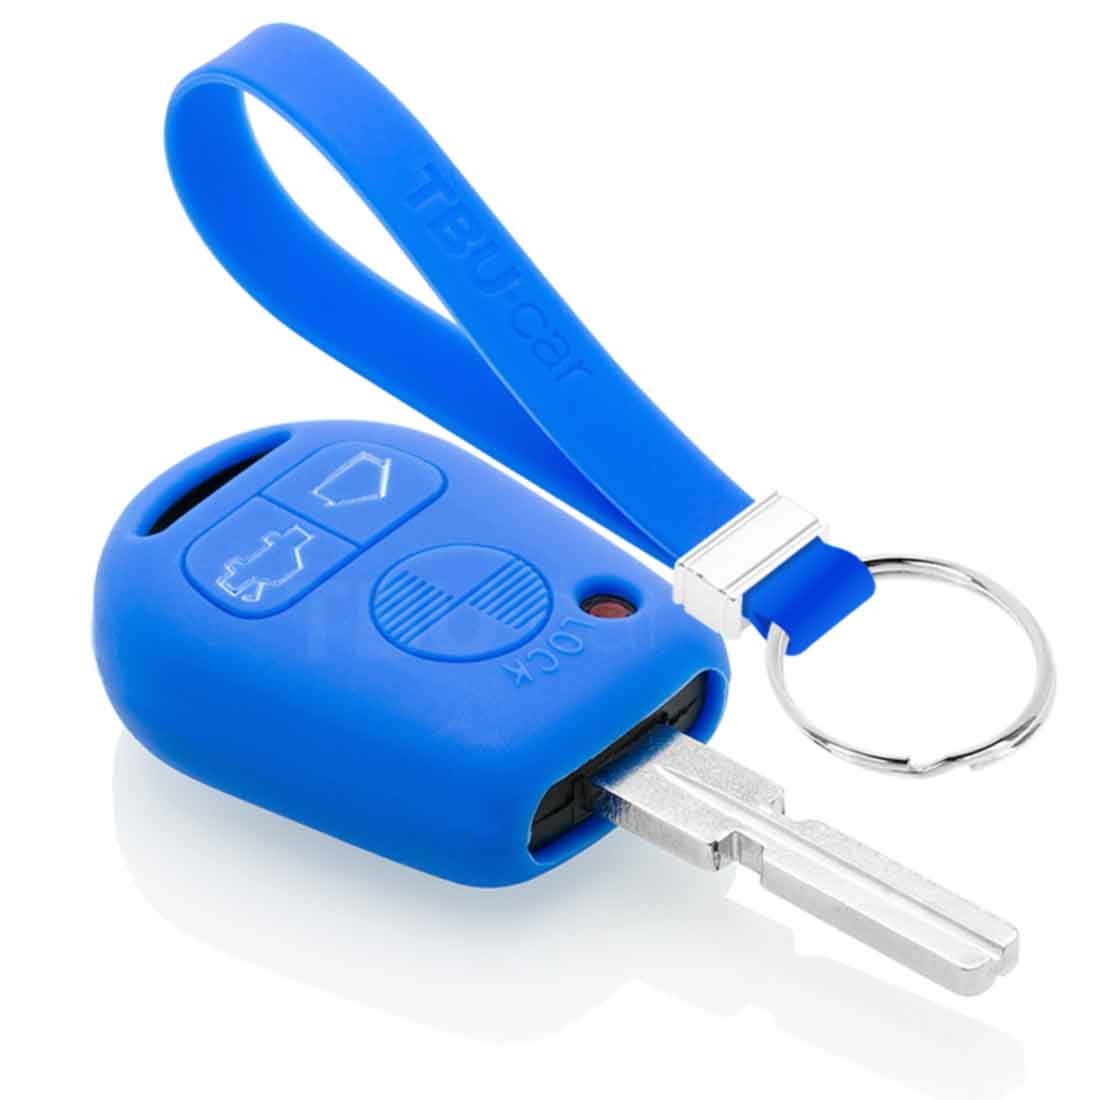 TBU car TBU car Autoschlüssel Hülle kompatibel mit BMW 3 Tasten - Schutzhülle aus Silikon - Auto Schlüsselhülle Cover in Blau